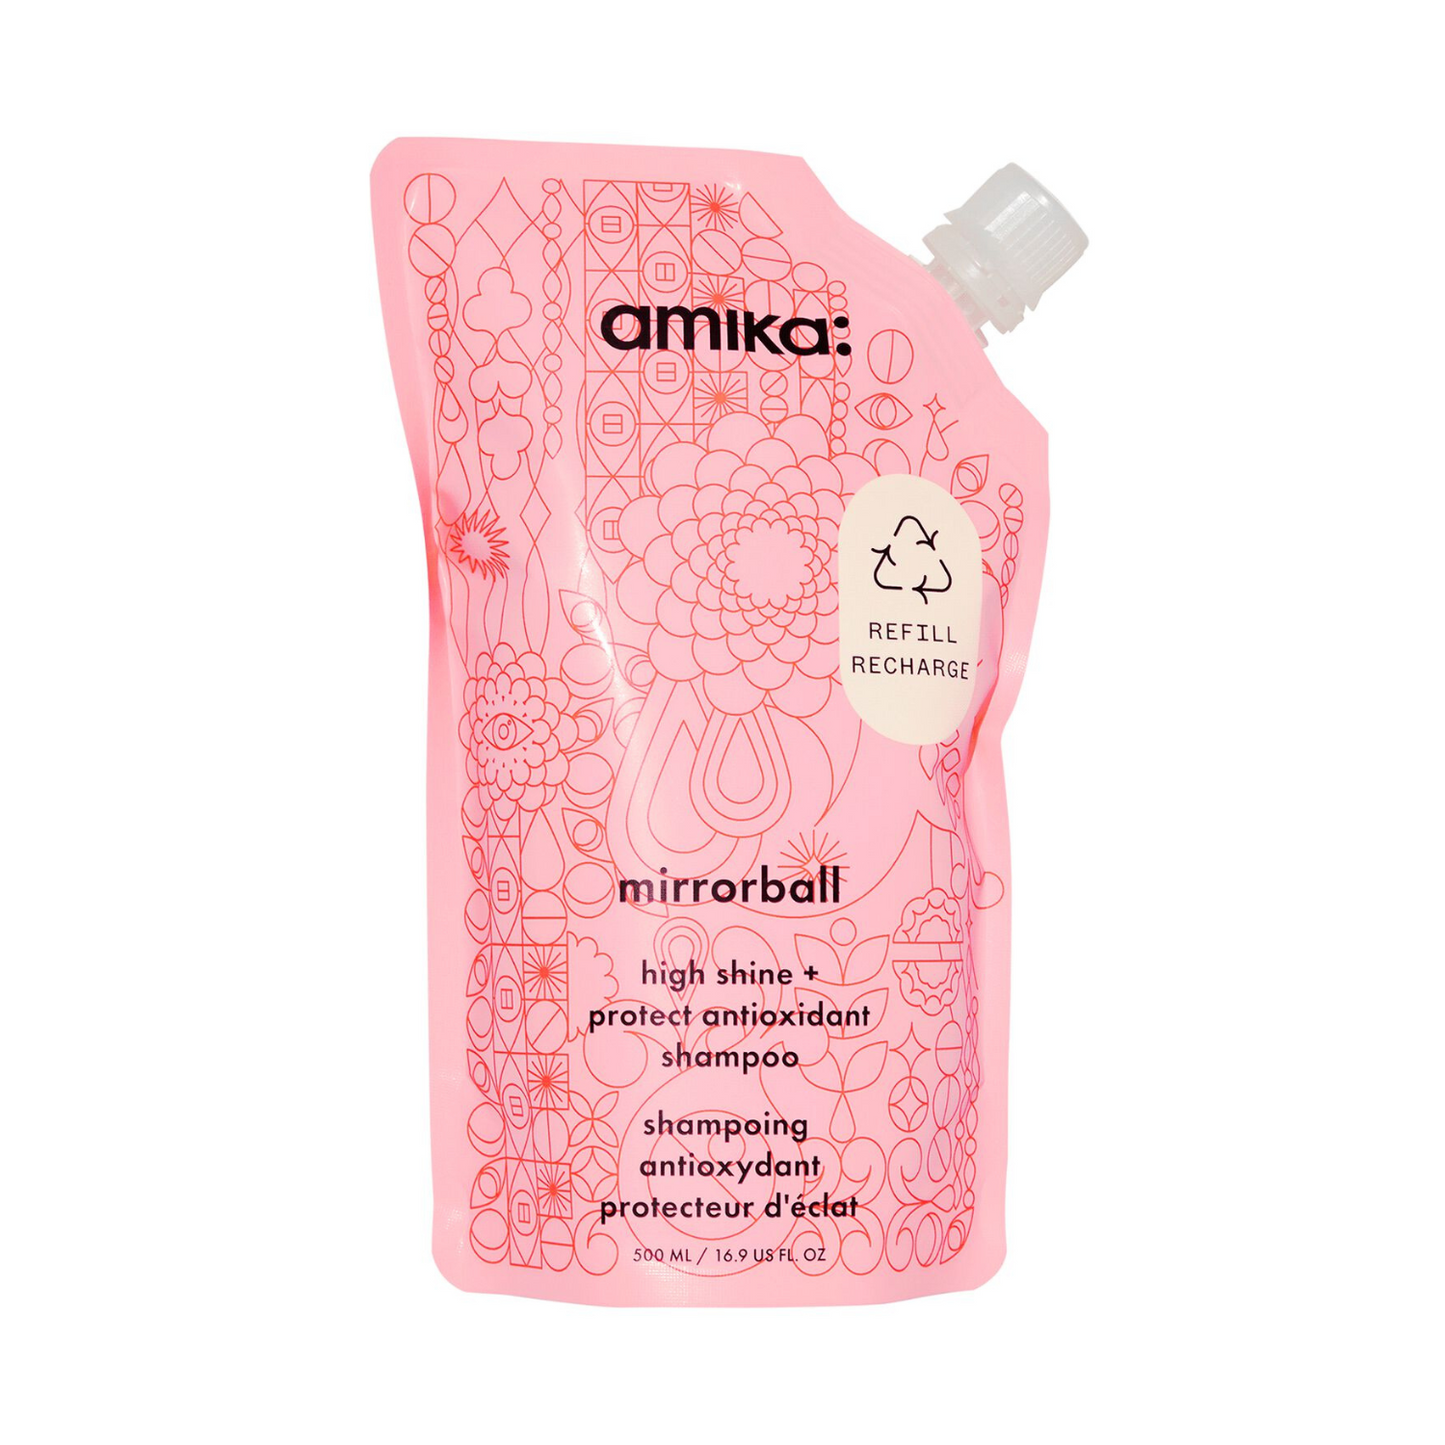 amika - Mirrorball High Shine & Protect Antioxidant Shampoo